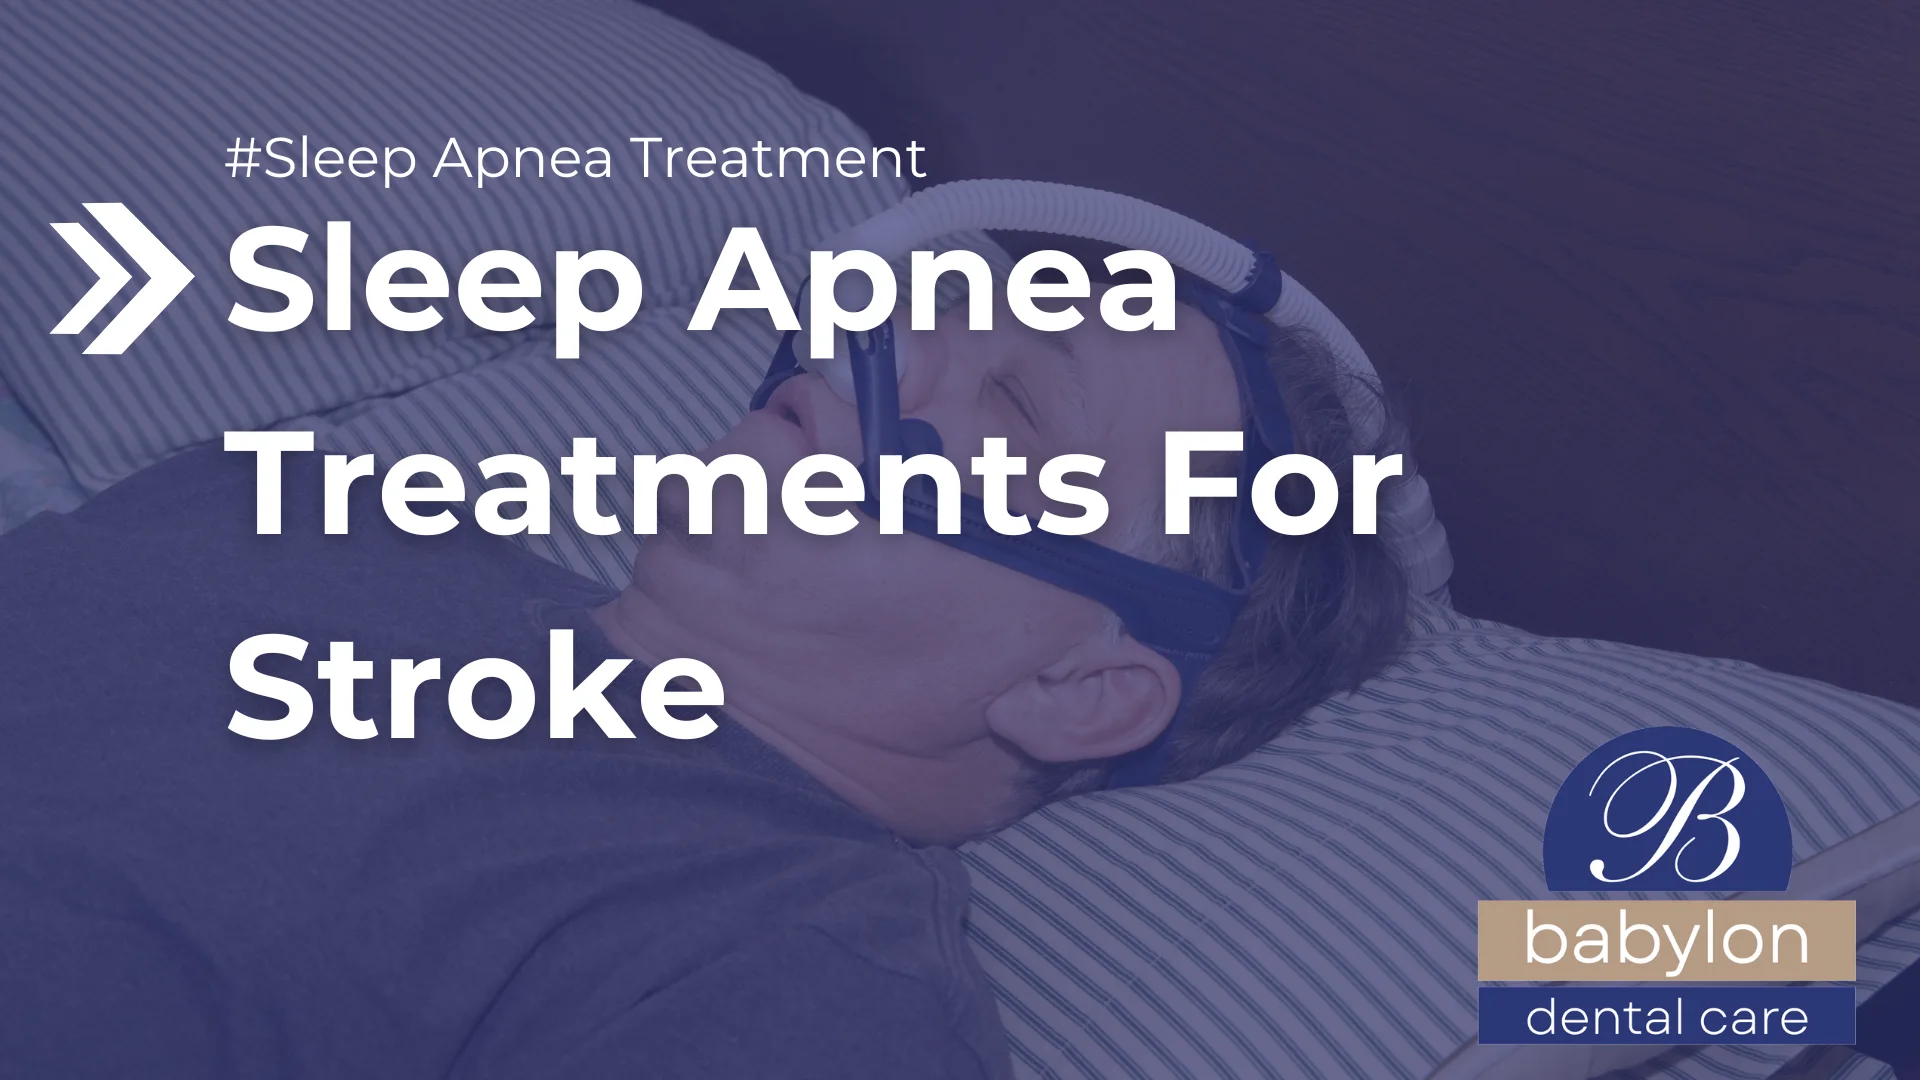 Sleep Apnea Treatments For Stroke Image - new logo